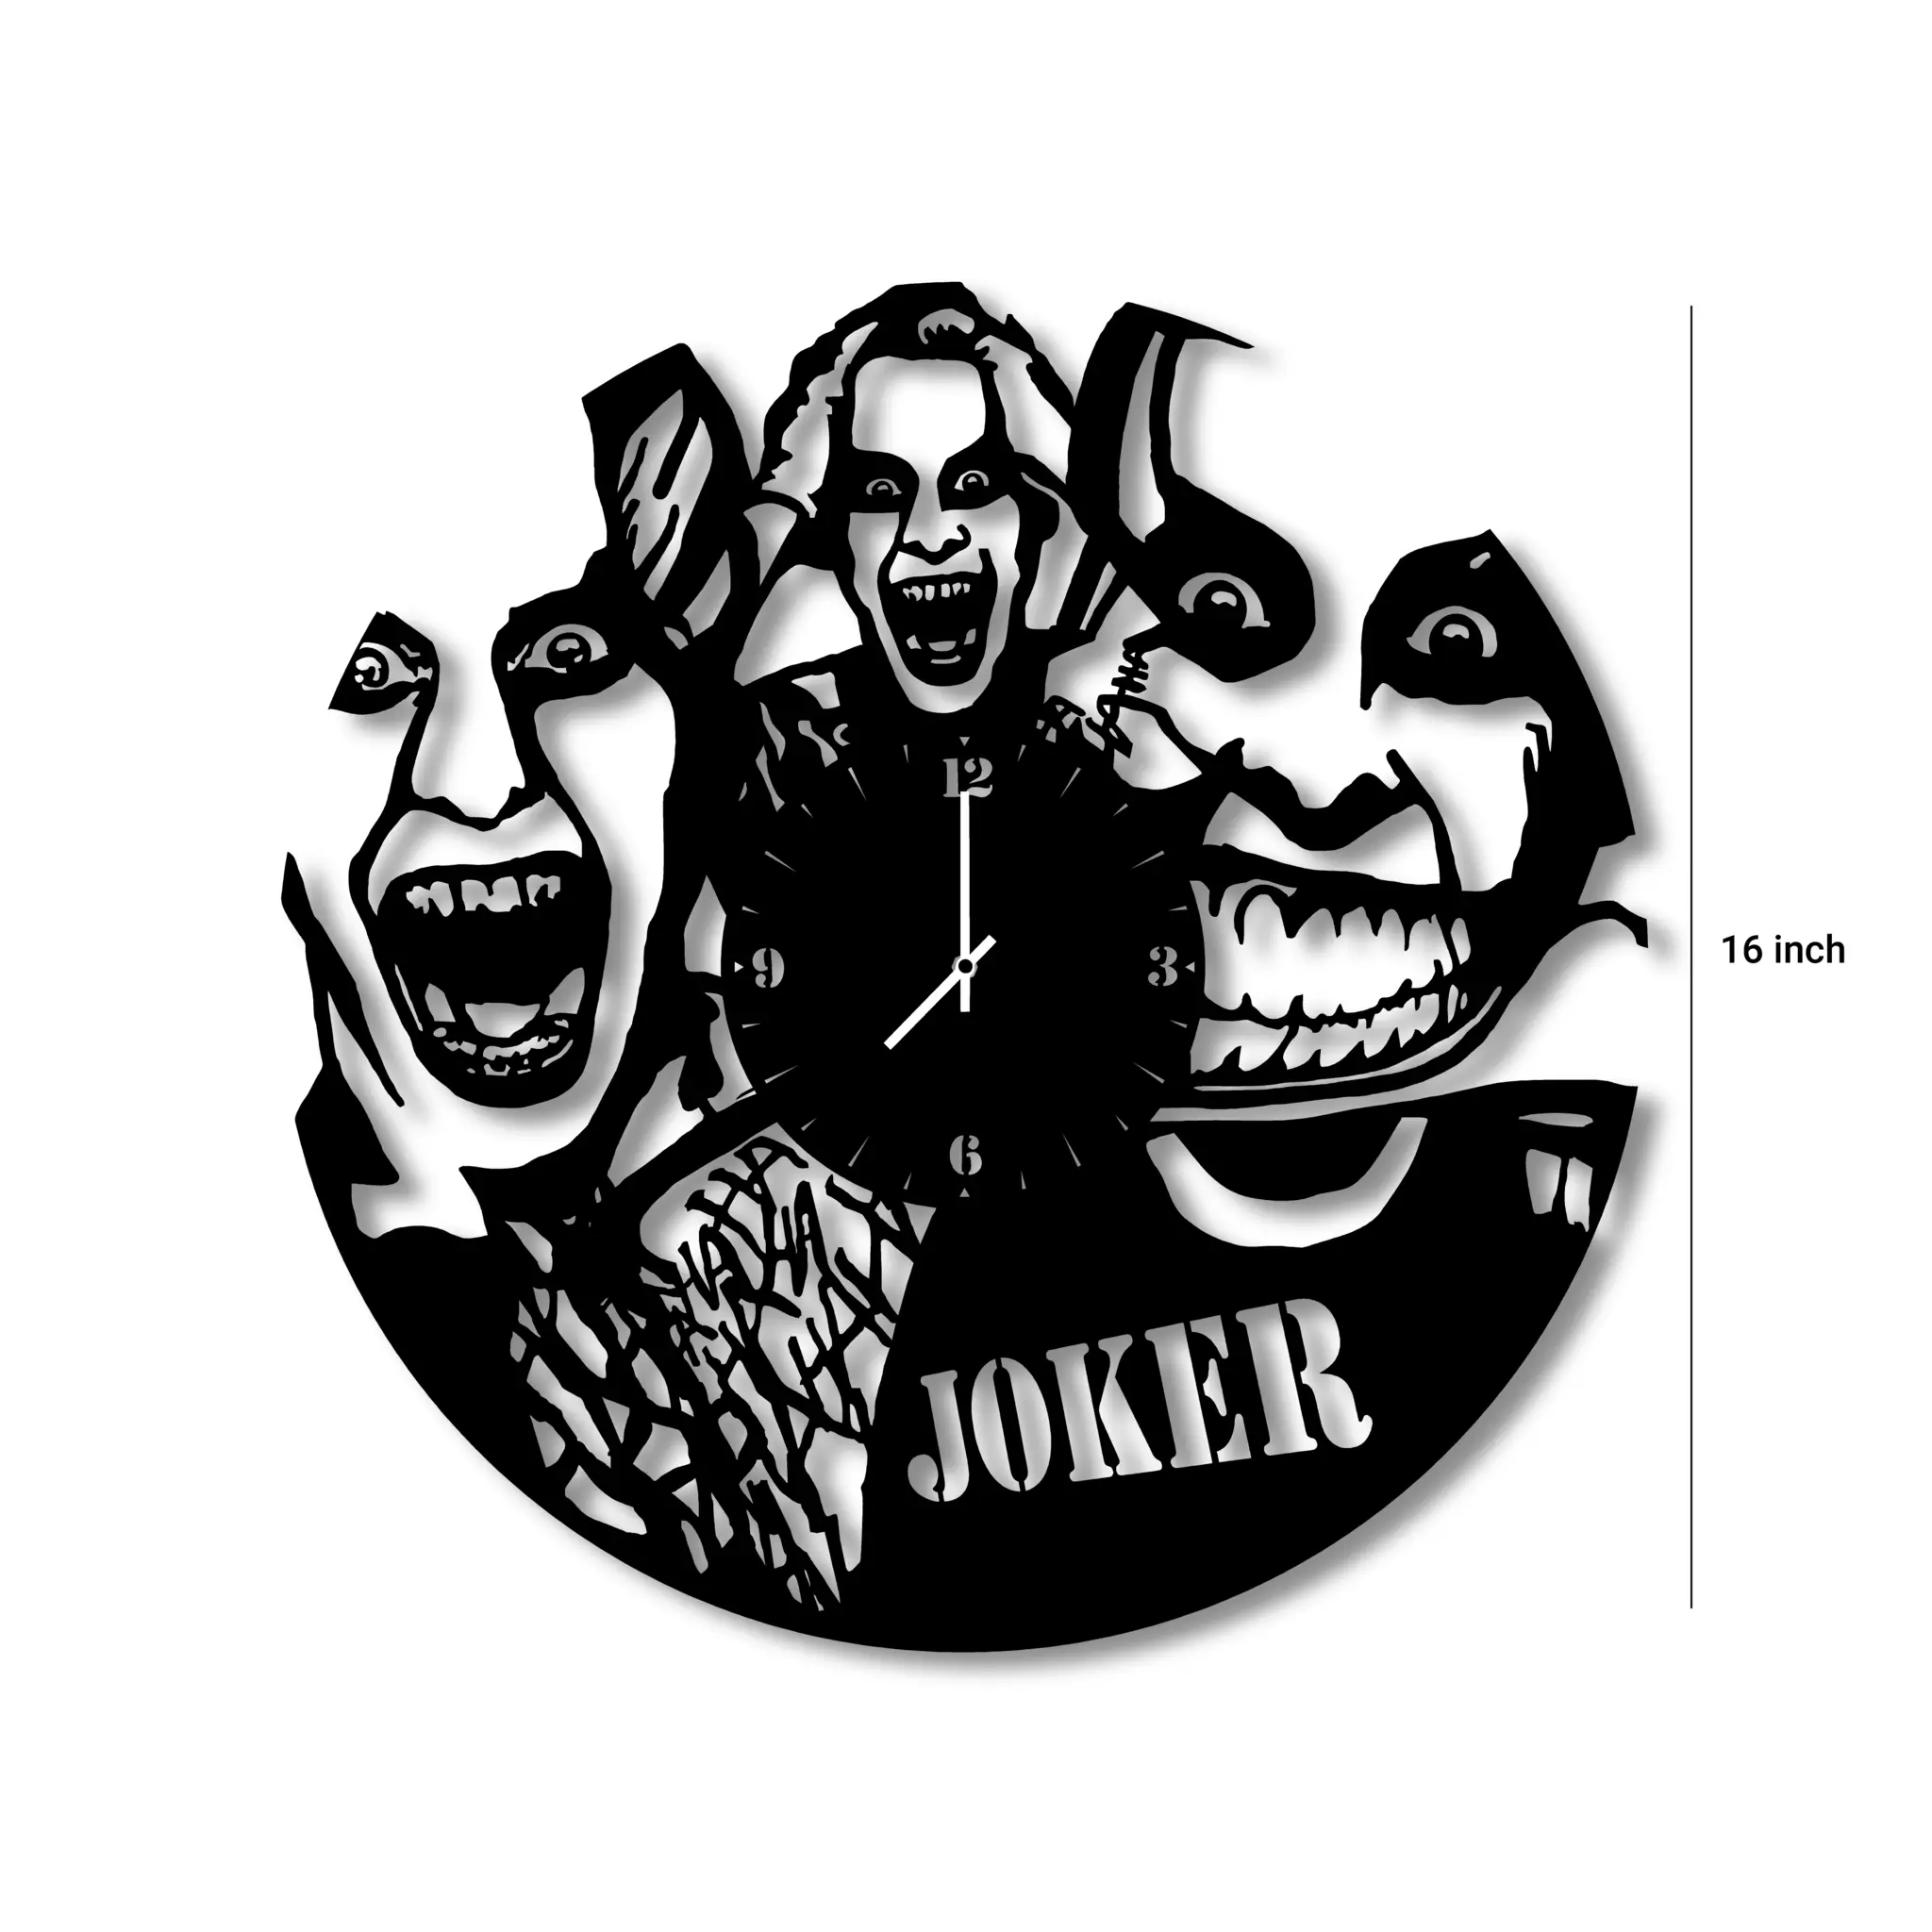 The Joker Wall Clock with Laser Cut Metal Record Wall Décor: DC Legends Original Living Room Comic Books Art: A Heartfelt Present for the Family